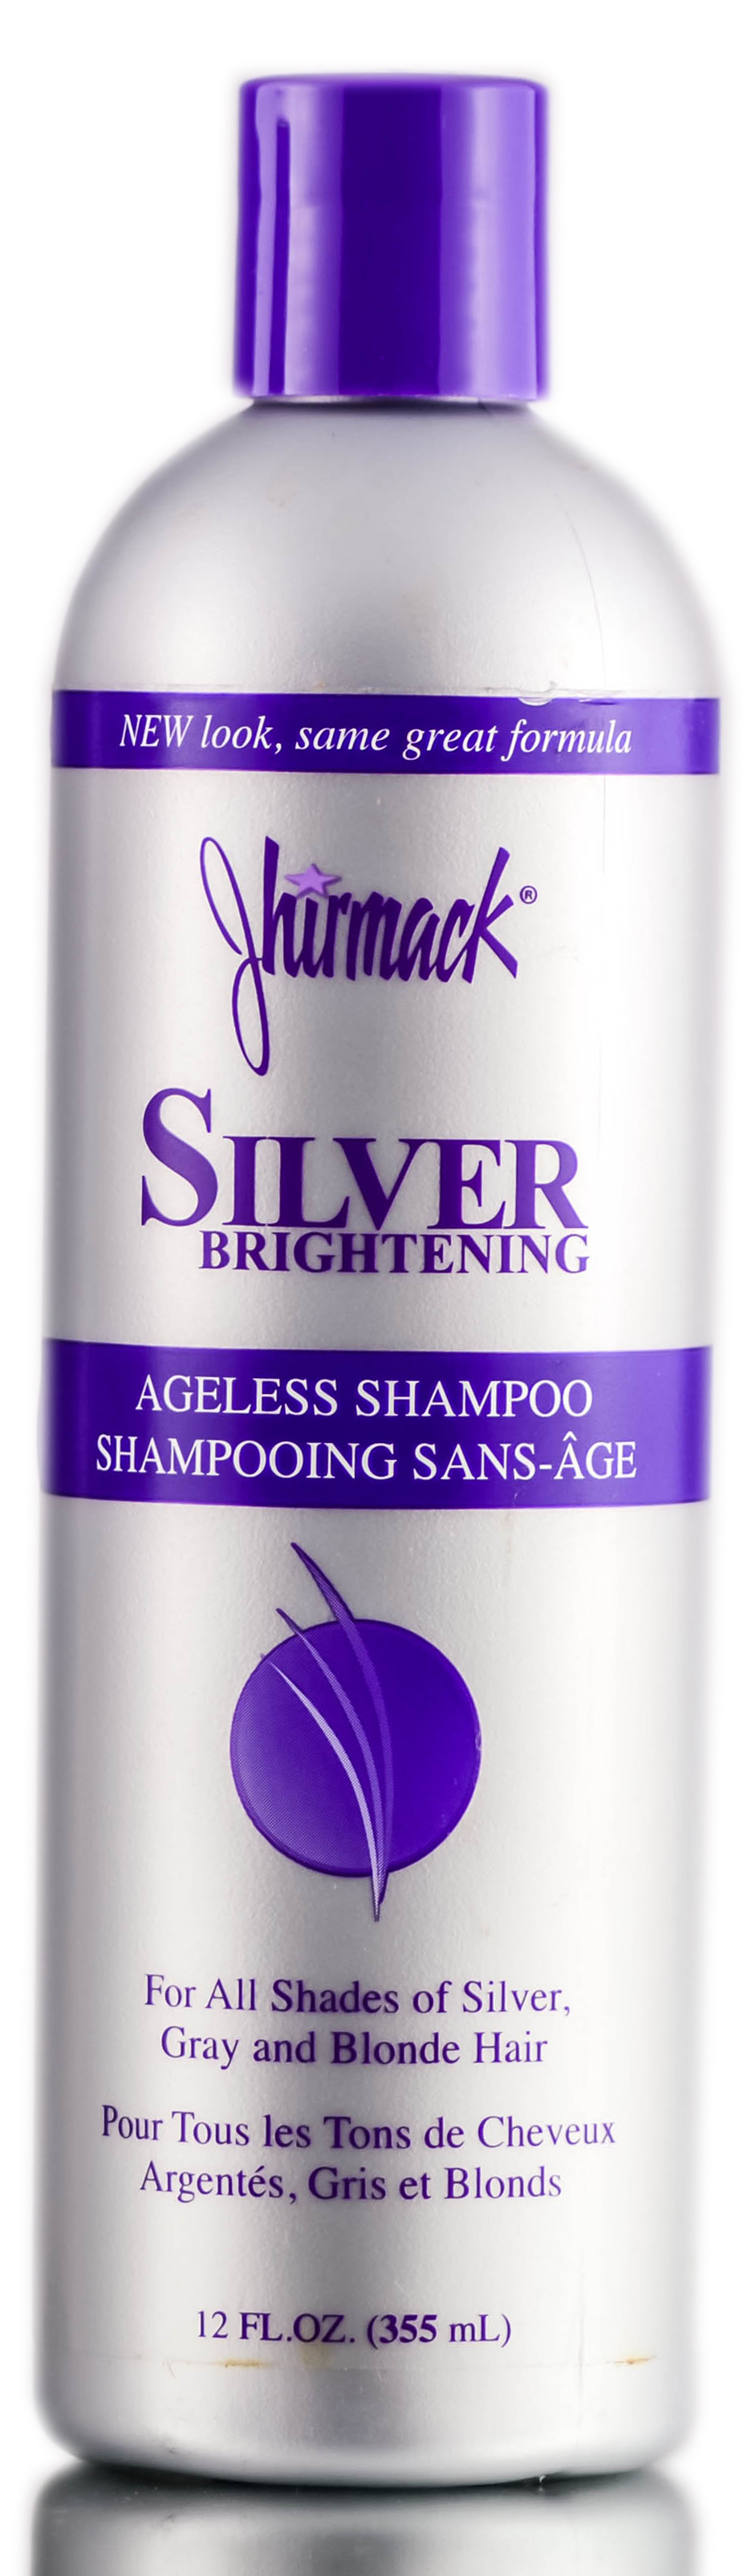 Jhirmack Brightening Purple Shampoo with Collagen, Tones Silver & Blonde Hair Shades, 12 fl oz - image 1 of 11